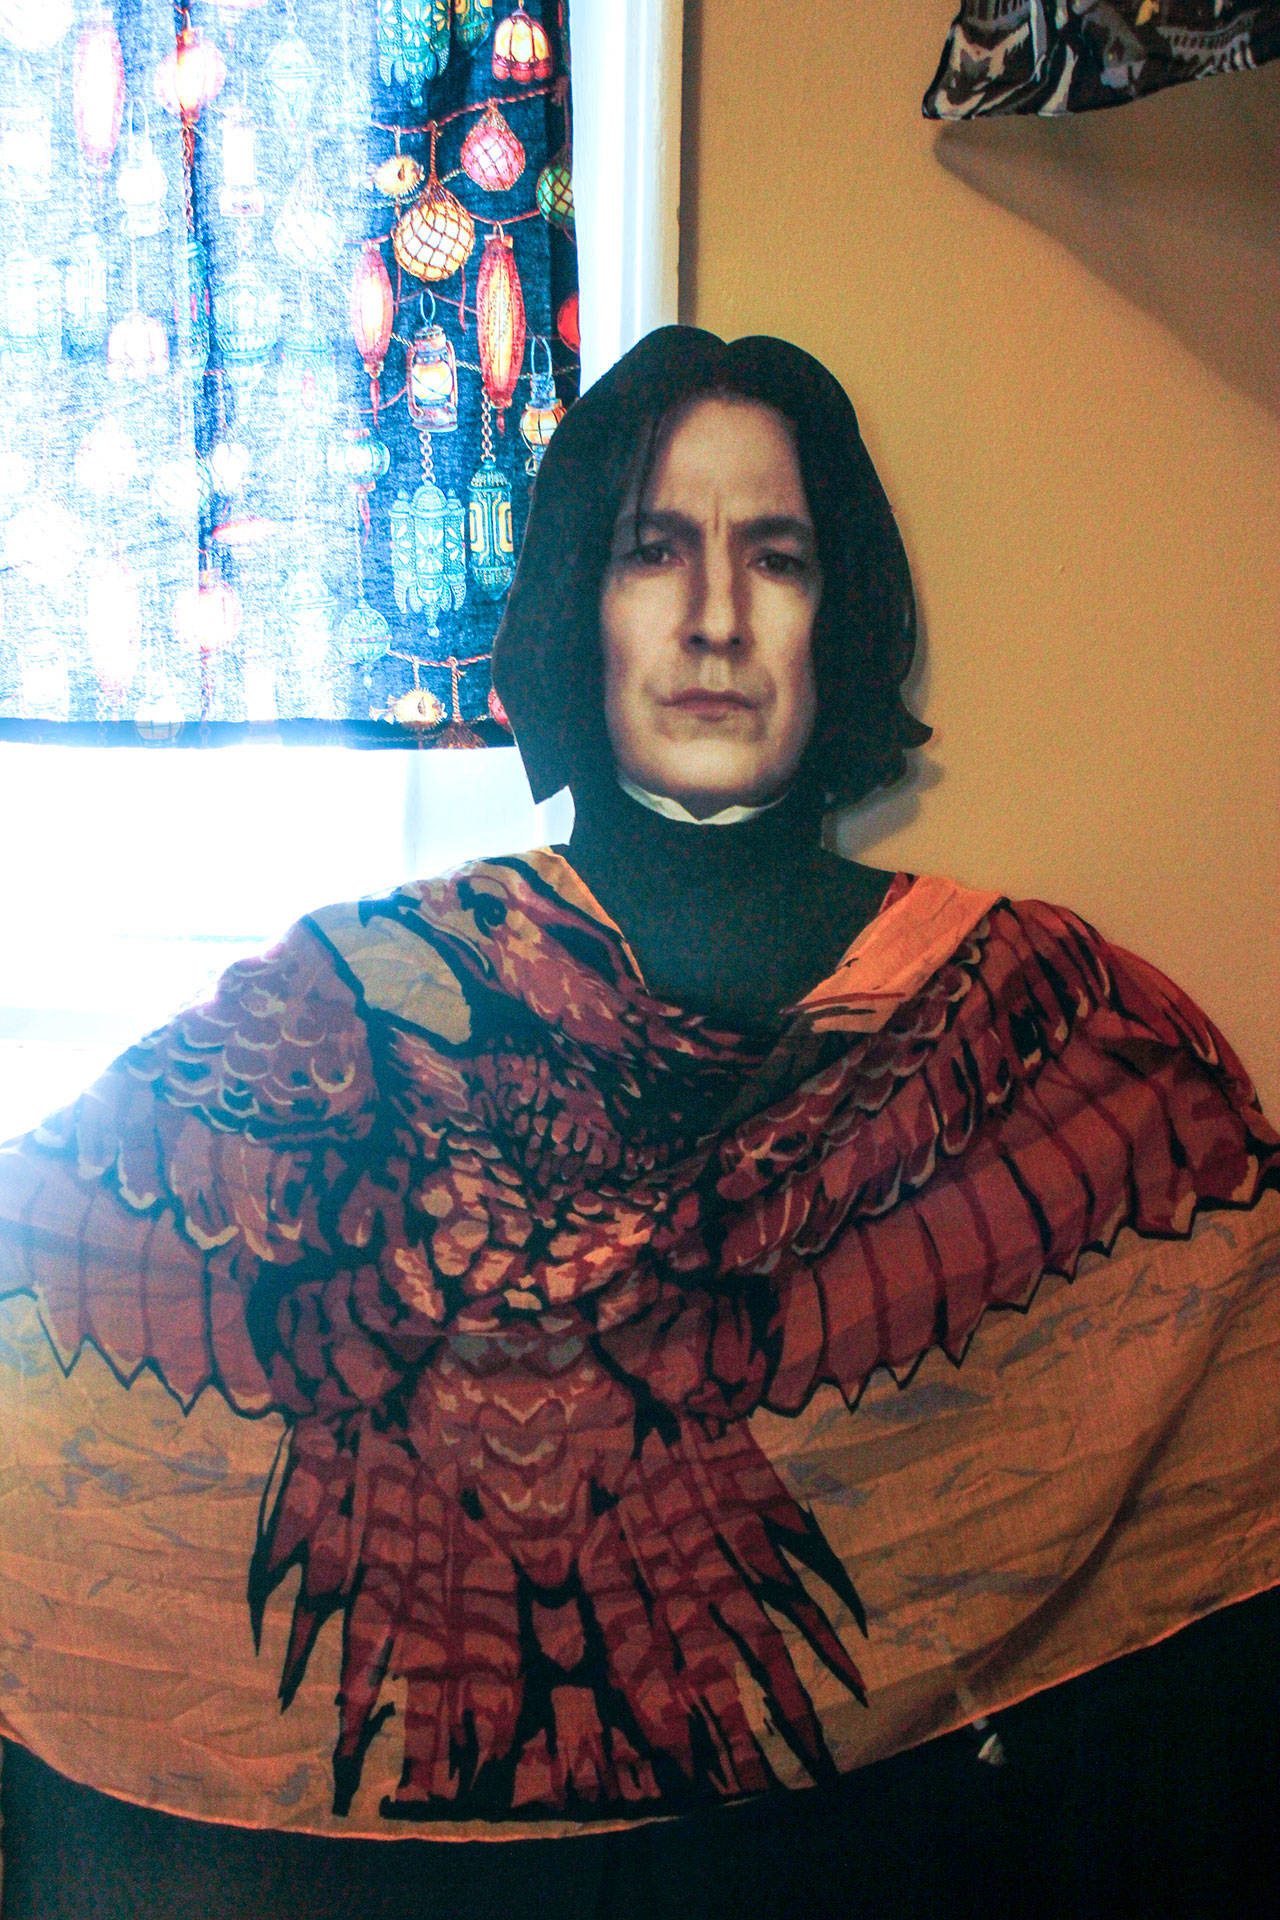 Professor Severus Snape will be present in Diagon Alley. (Sophie Bonomi/Kitsap News Group)